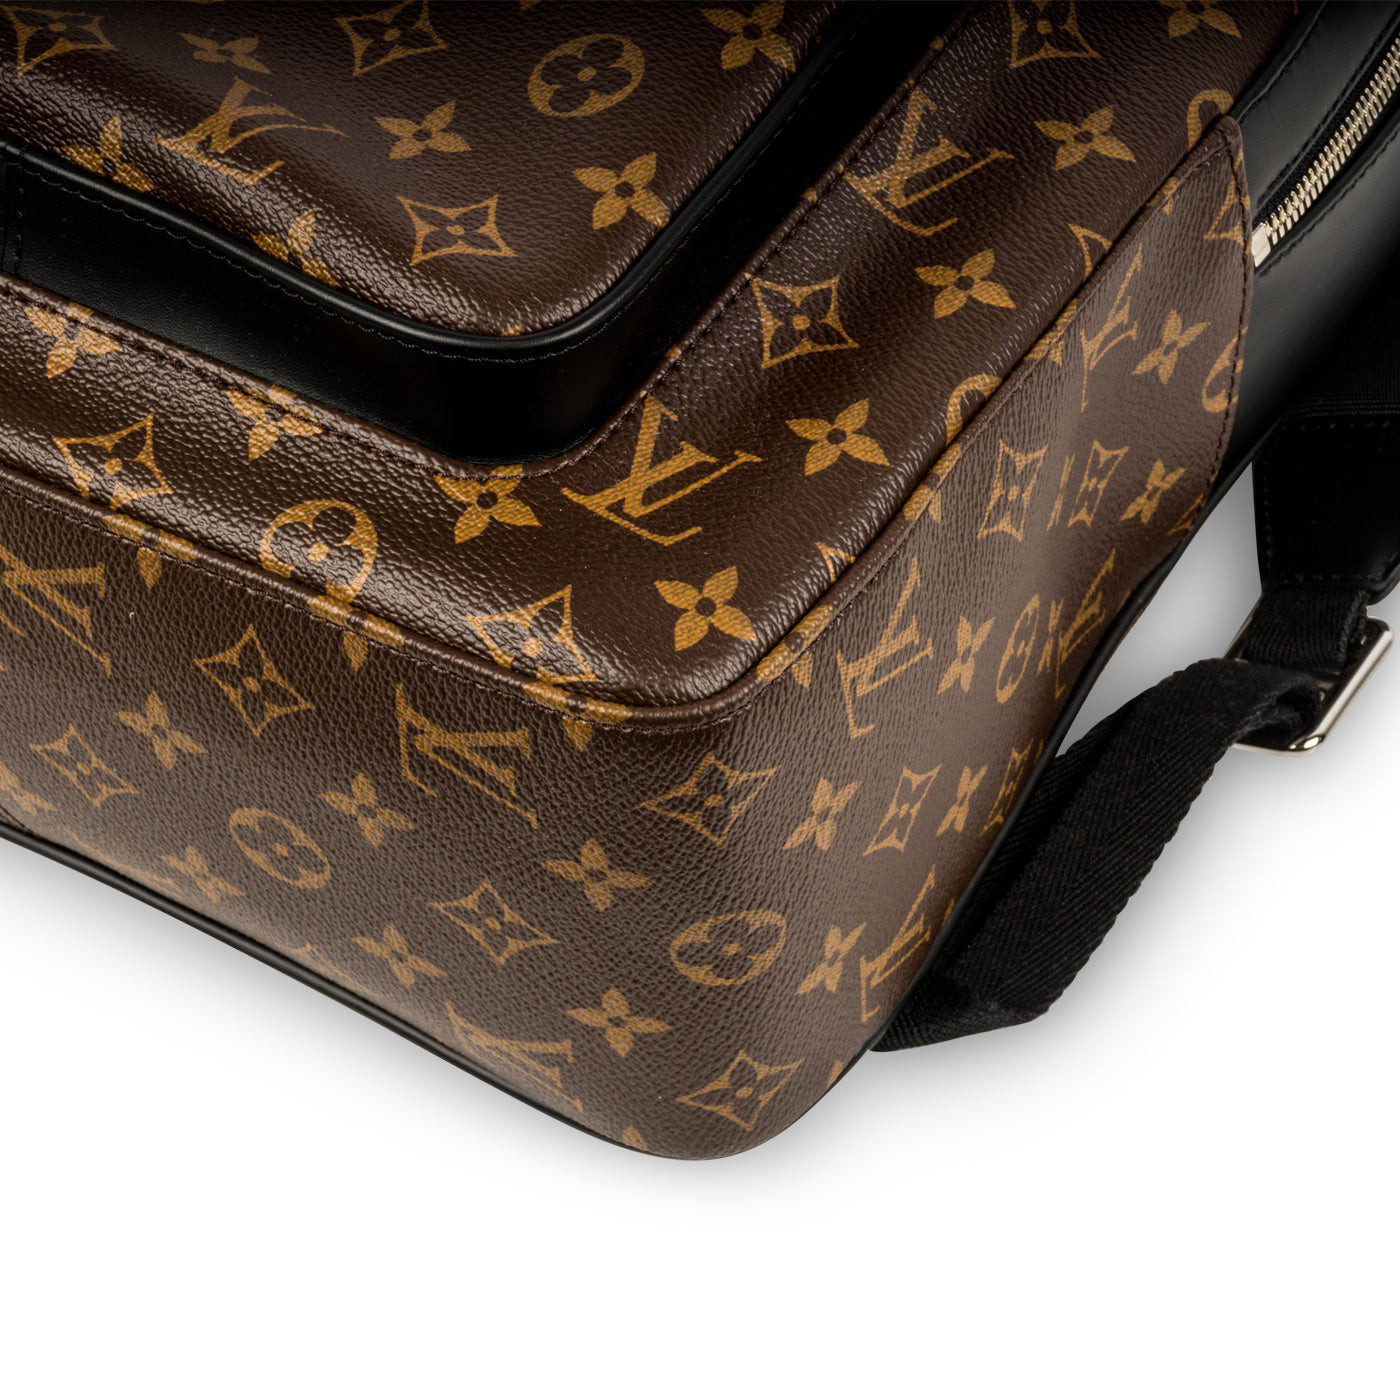 Louis Vuitton Lv man backpack josh shoulders bag